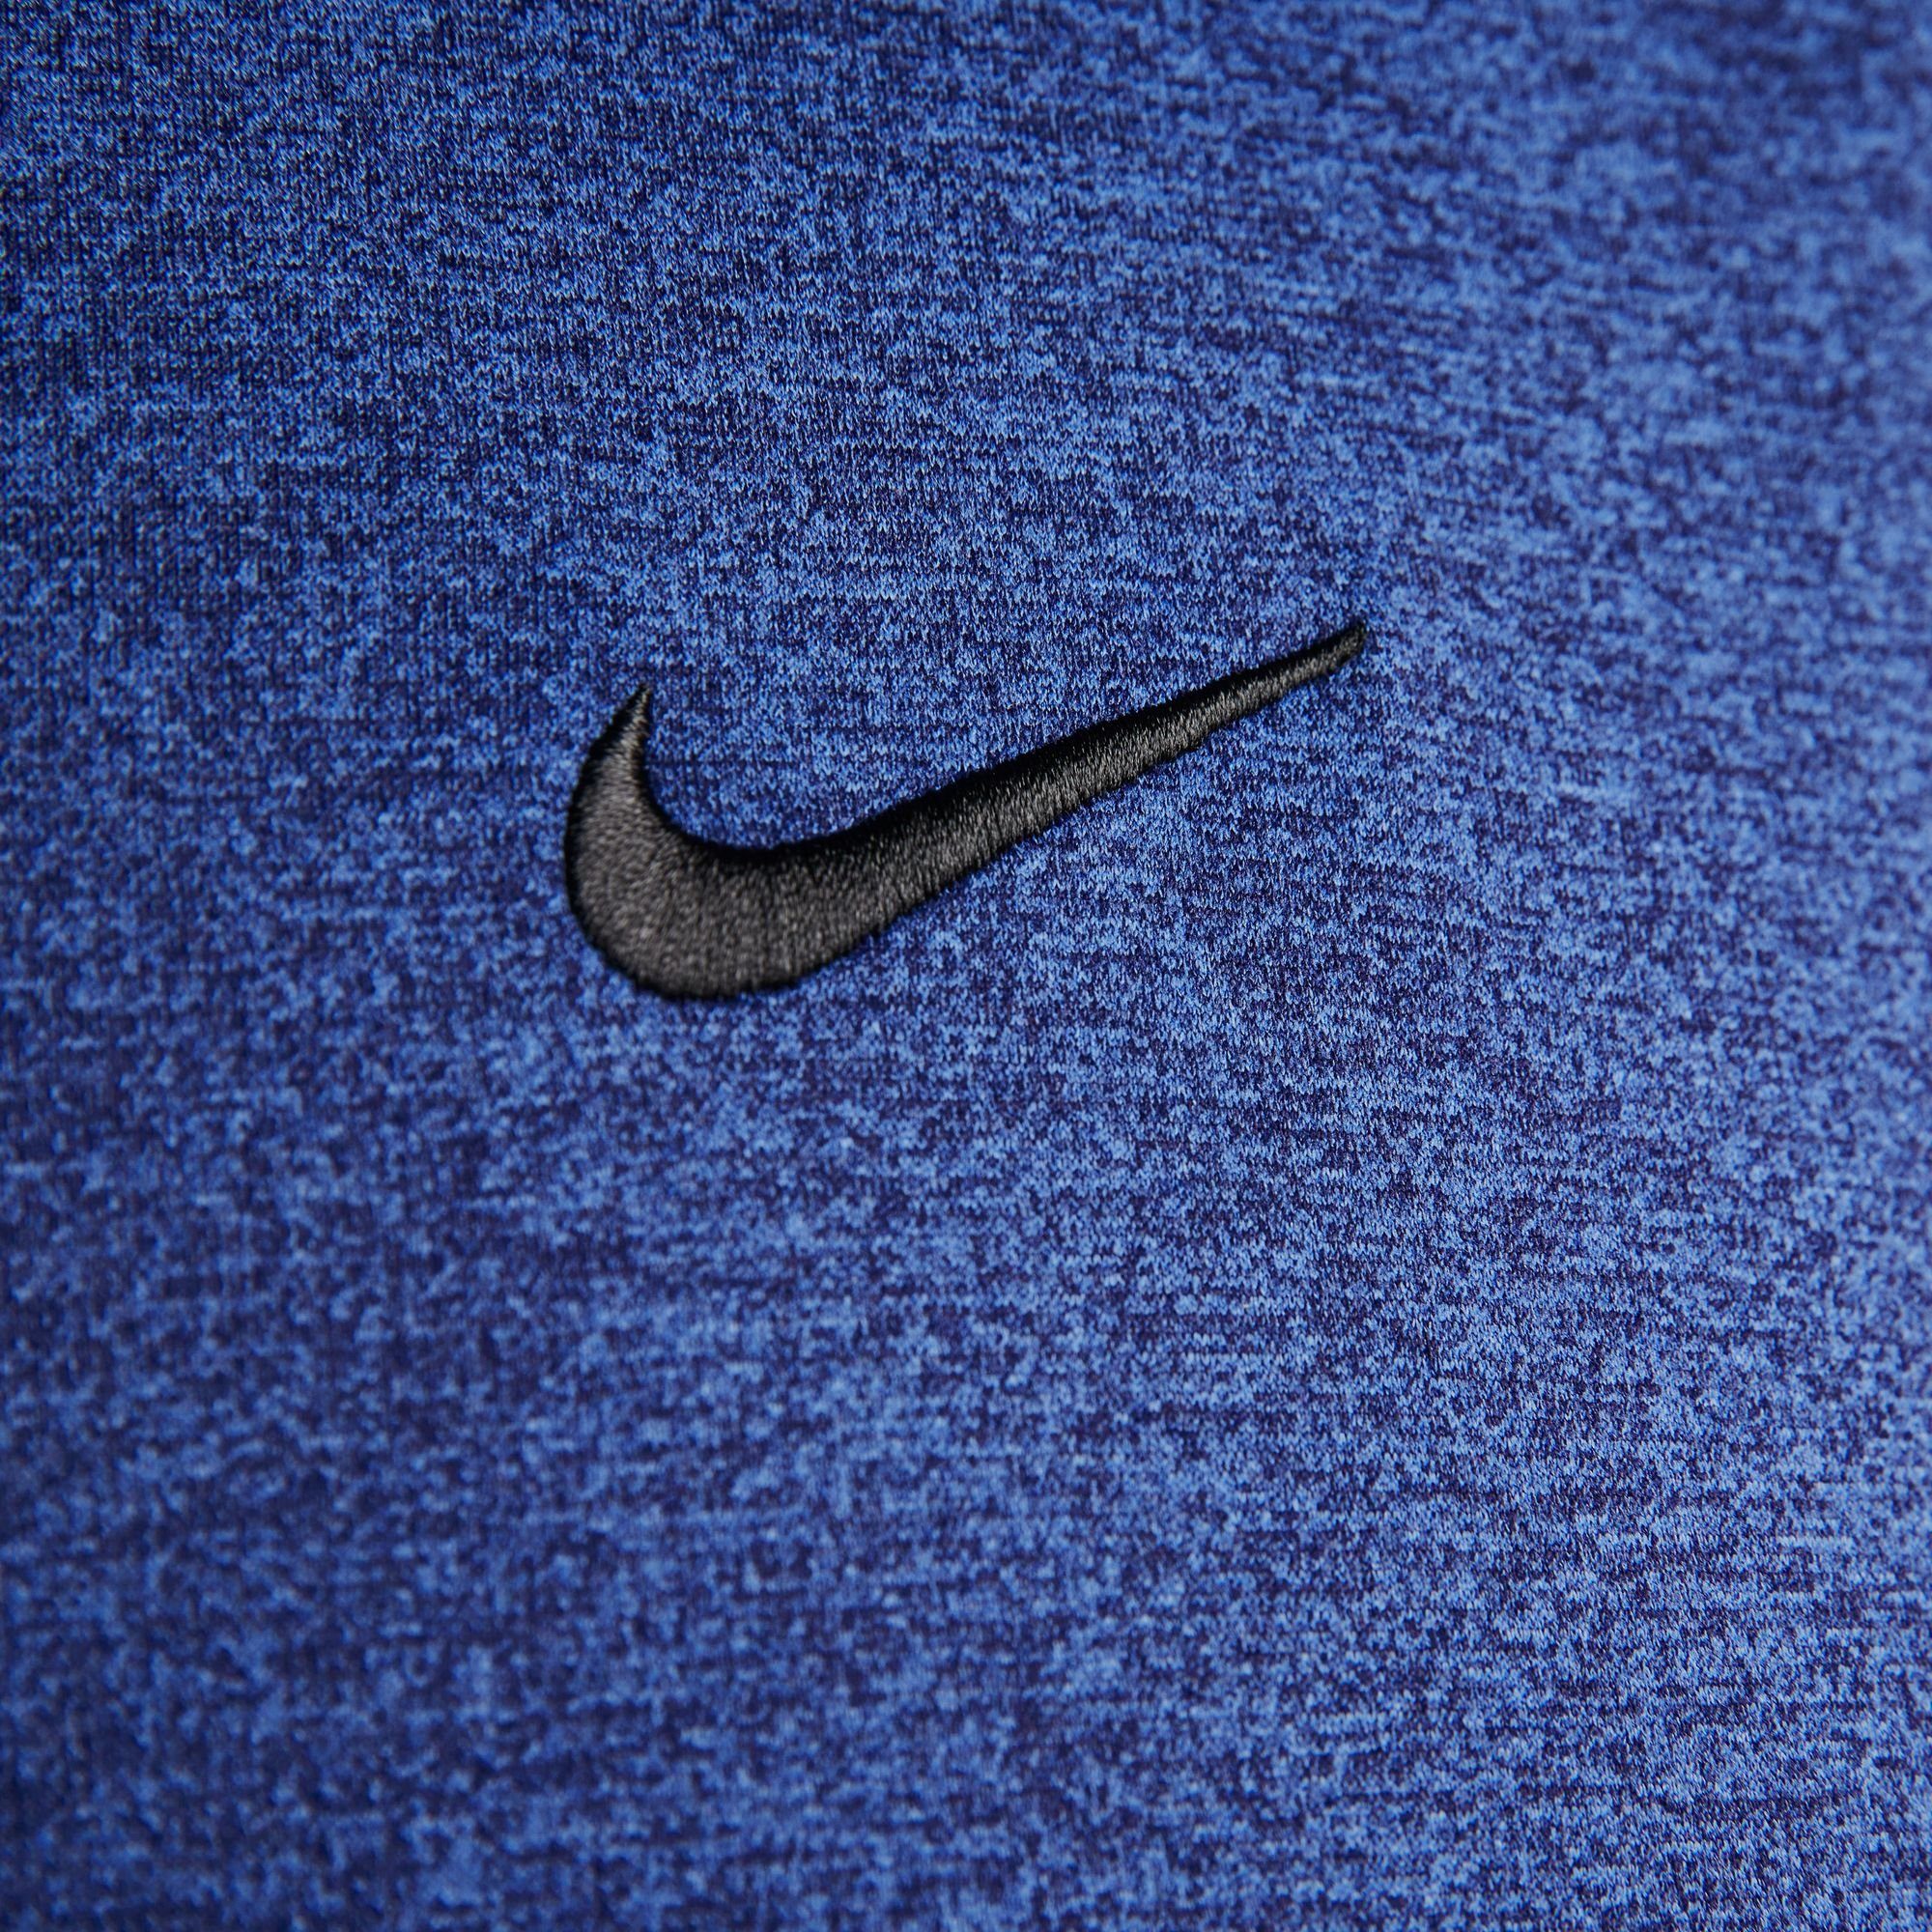 HOODIE BLUE VOID/HTR/GAME Nike FITNESS Kapuzensweatshirt ROYAL/BLACK PULLOVER MEN'S THERMA-FIT